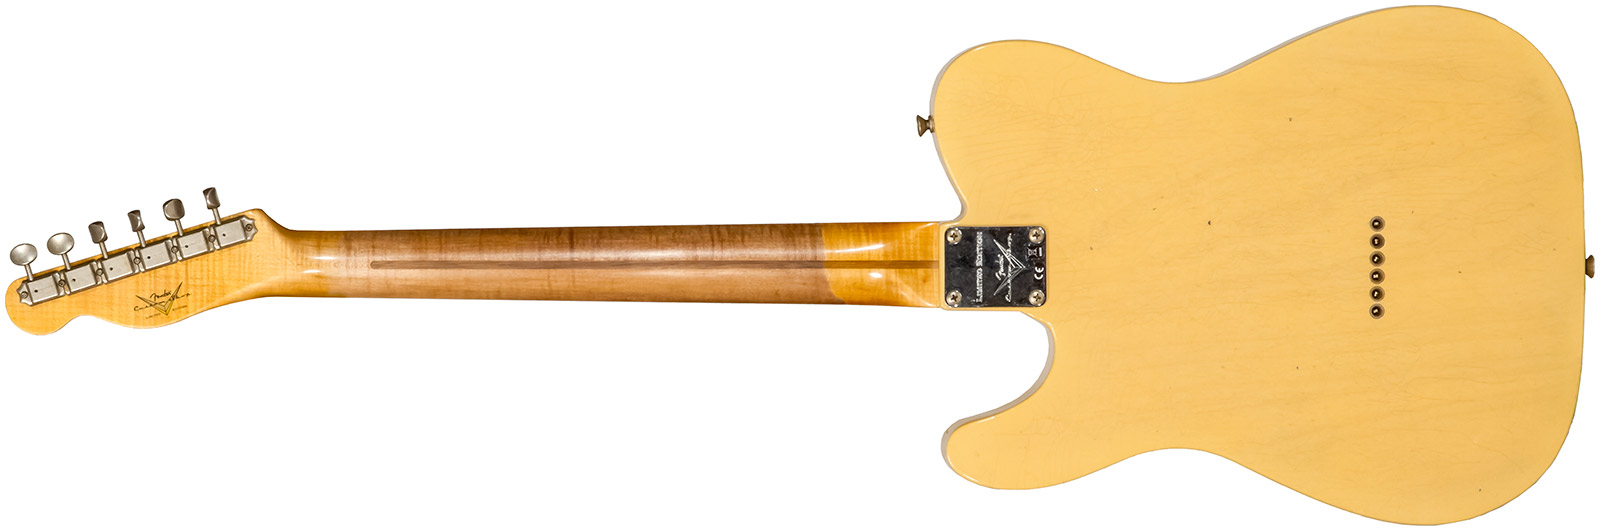 Fender Custom Shop Tele 1953 2s Ht Mn #r126793 - Journeyman Relic Aged Nocaster Blonde - Guitarra eléctrica con forma de tel - Variation 1